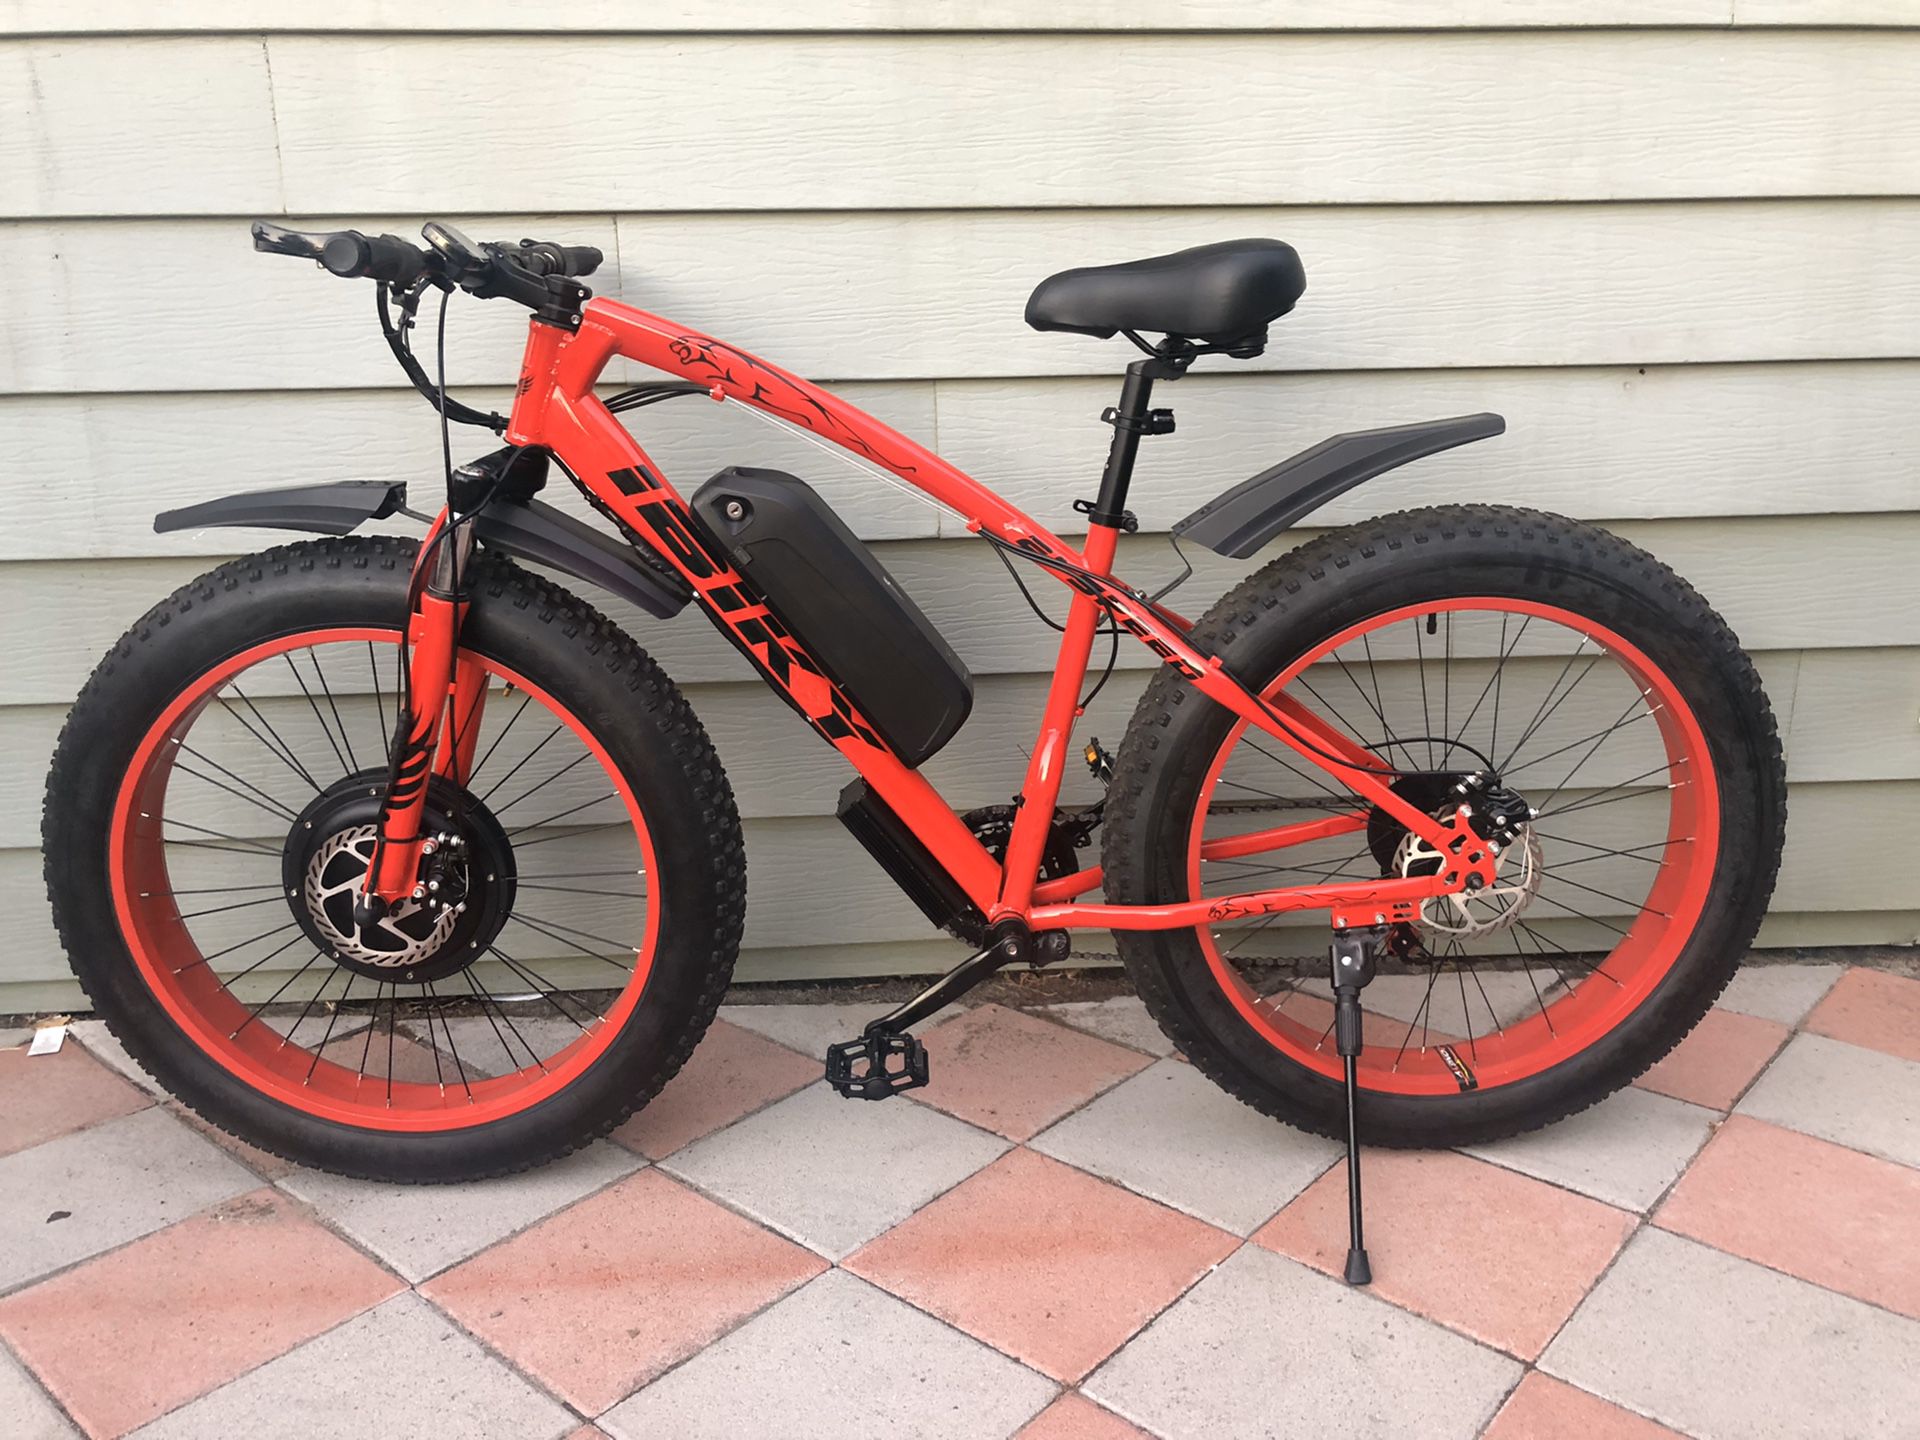 New FAST custom eBike, 1500w motor 48v lithium battery electric bicycle cruiser mountain bike downhill